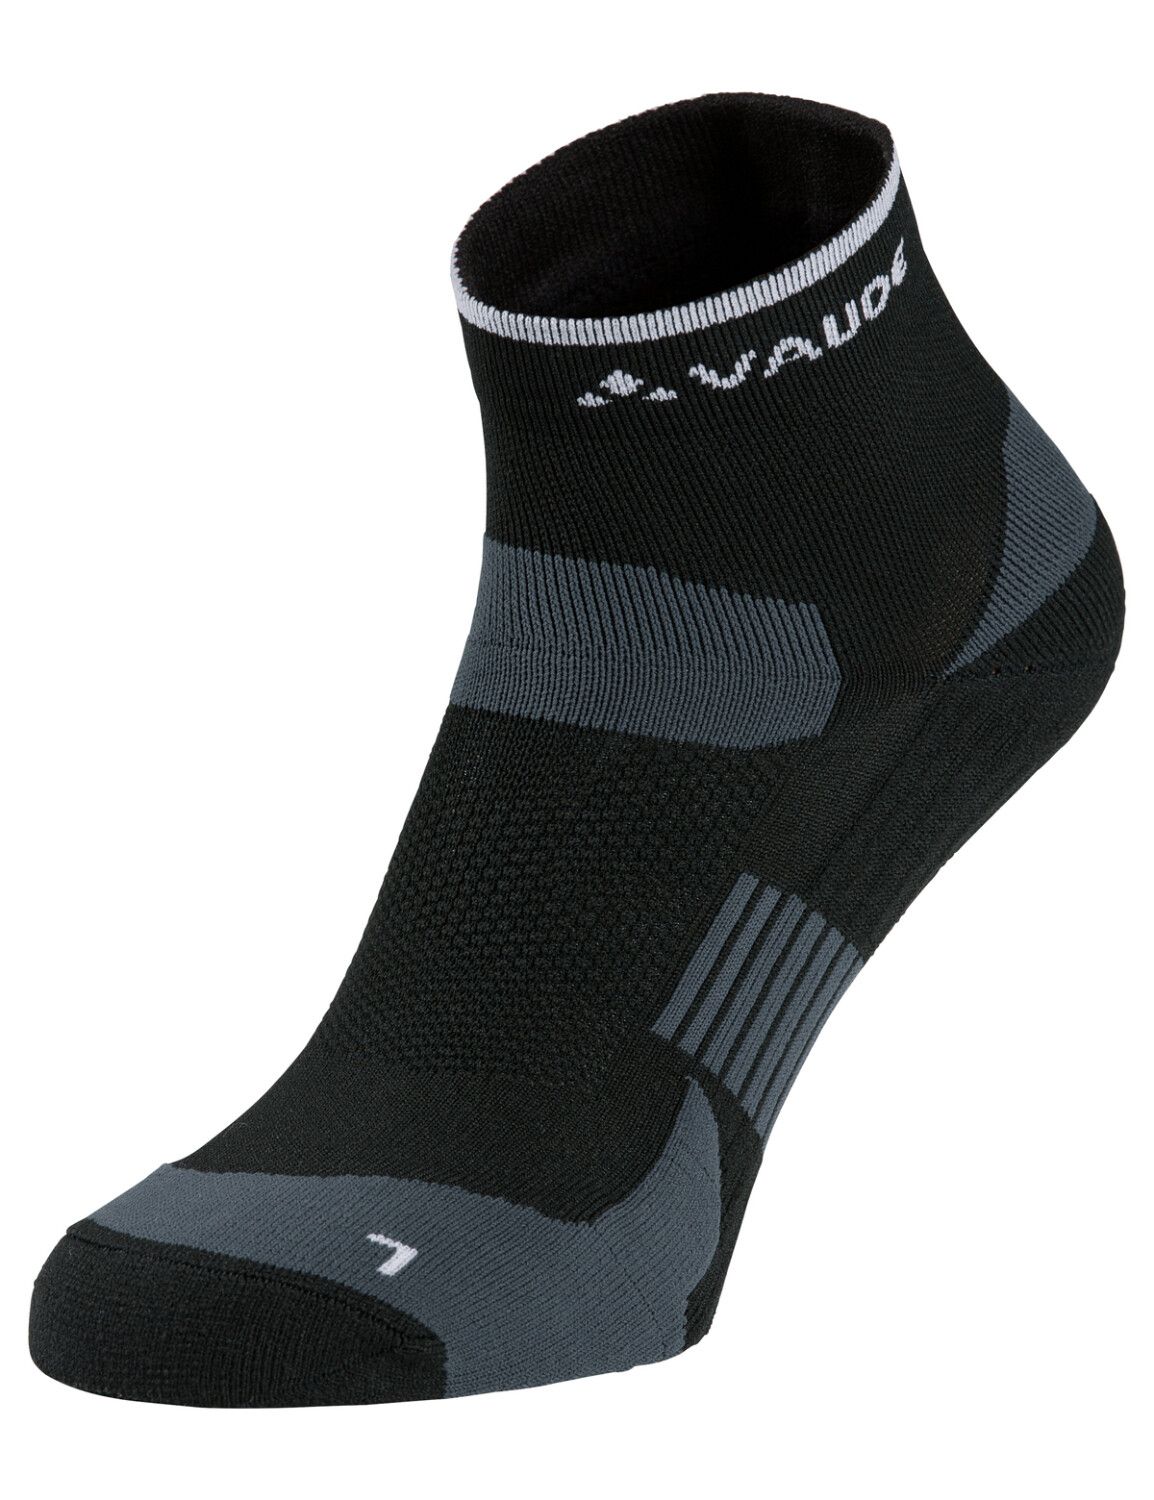 VAUDE Bike Socks Short (Bild 5)